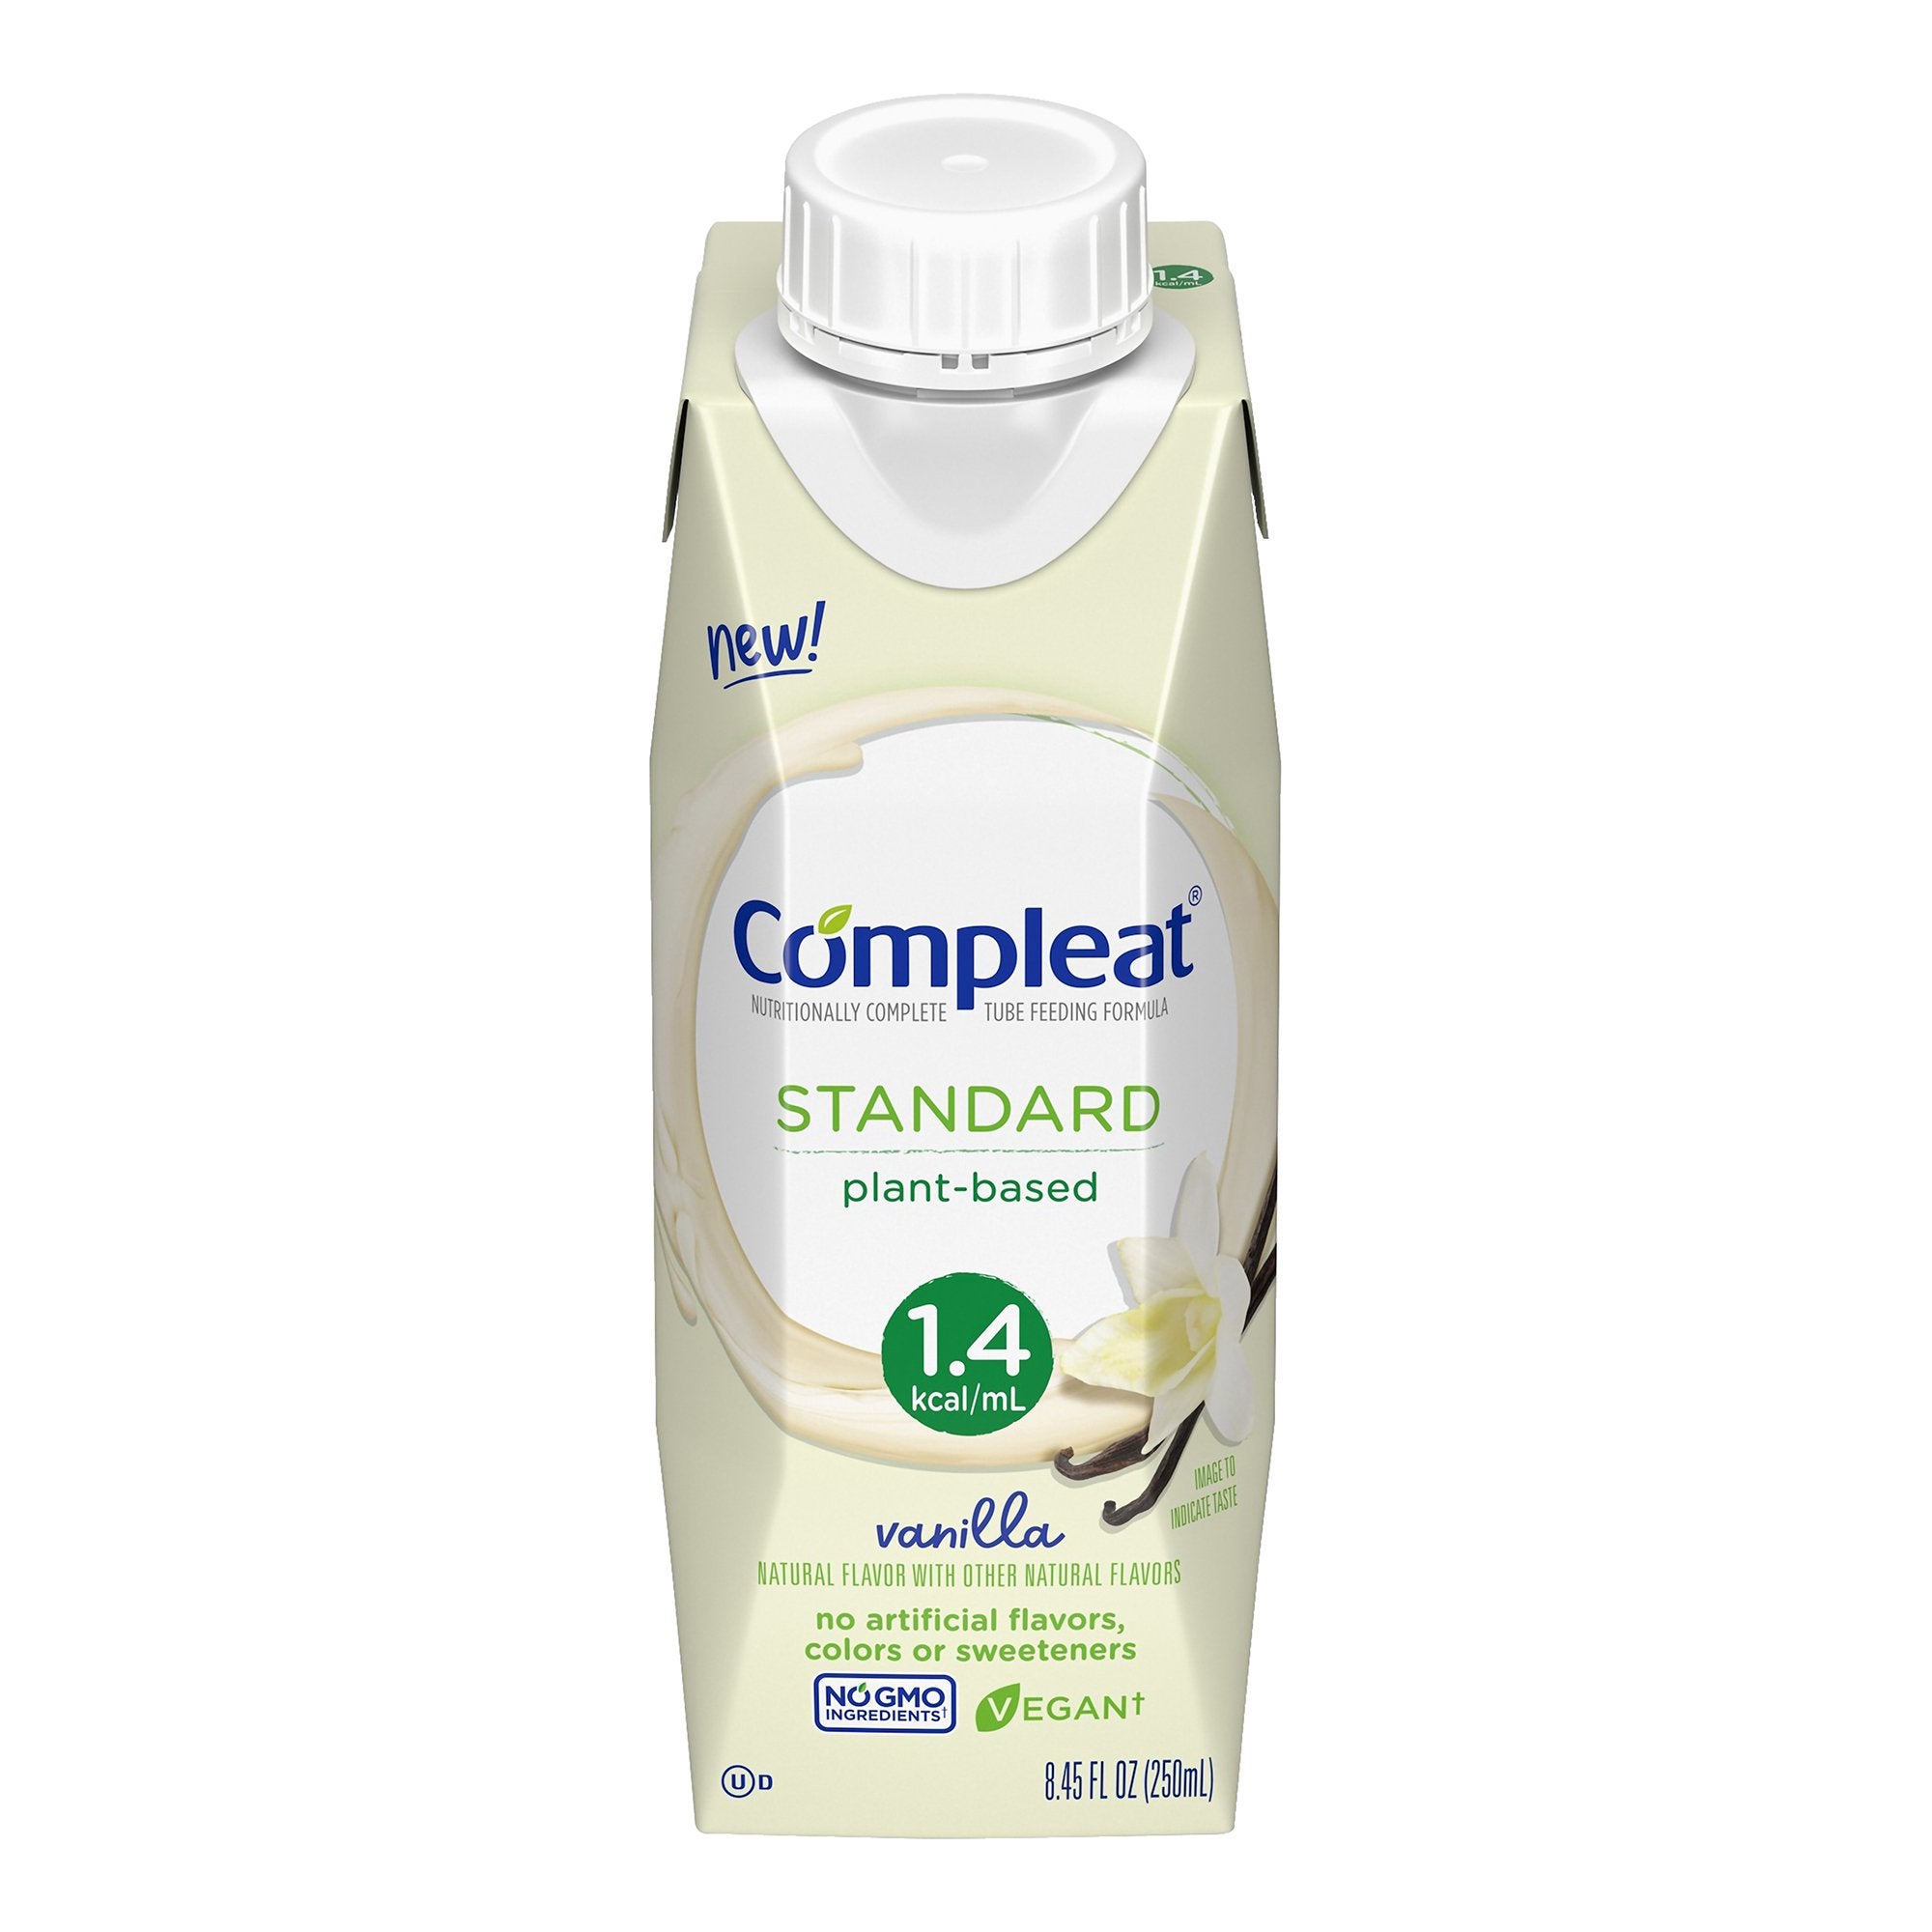 Oral Supplement Compleat Standard 1.4 Cal Vanilla Flavor Liquid 8.45 oz. Carton